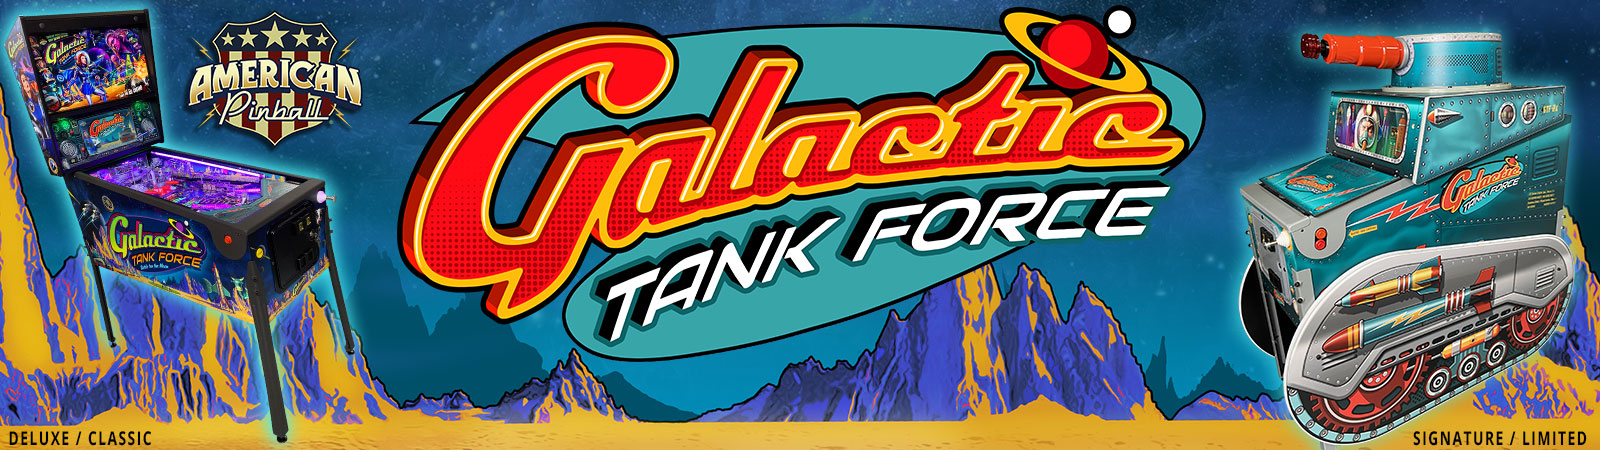 Galactic Tank Force Deluxe Pinball Machine